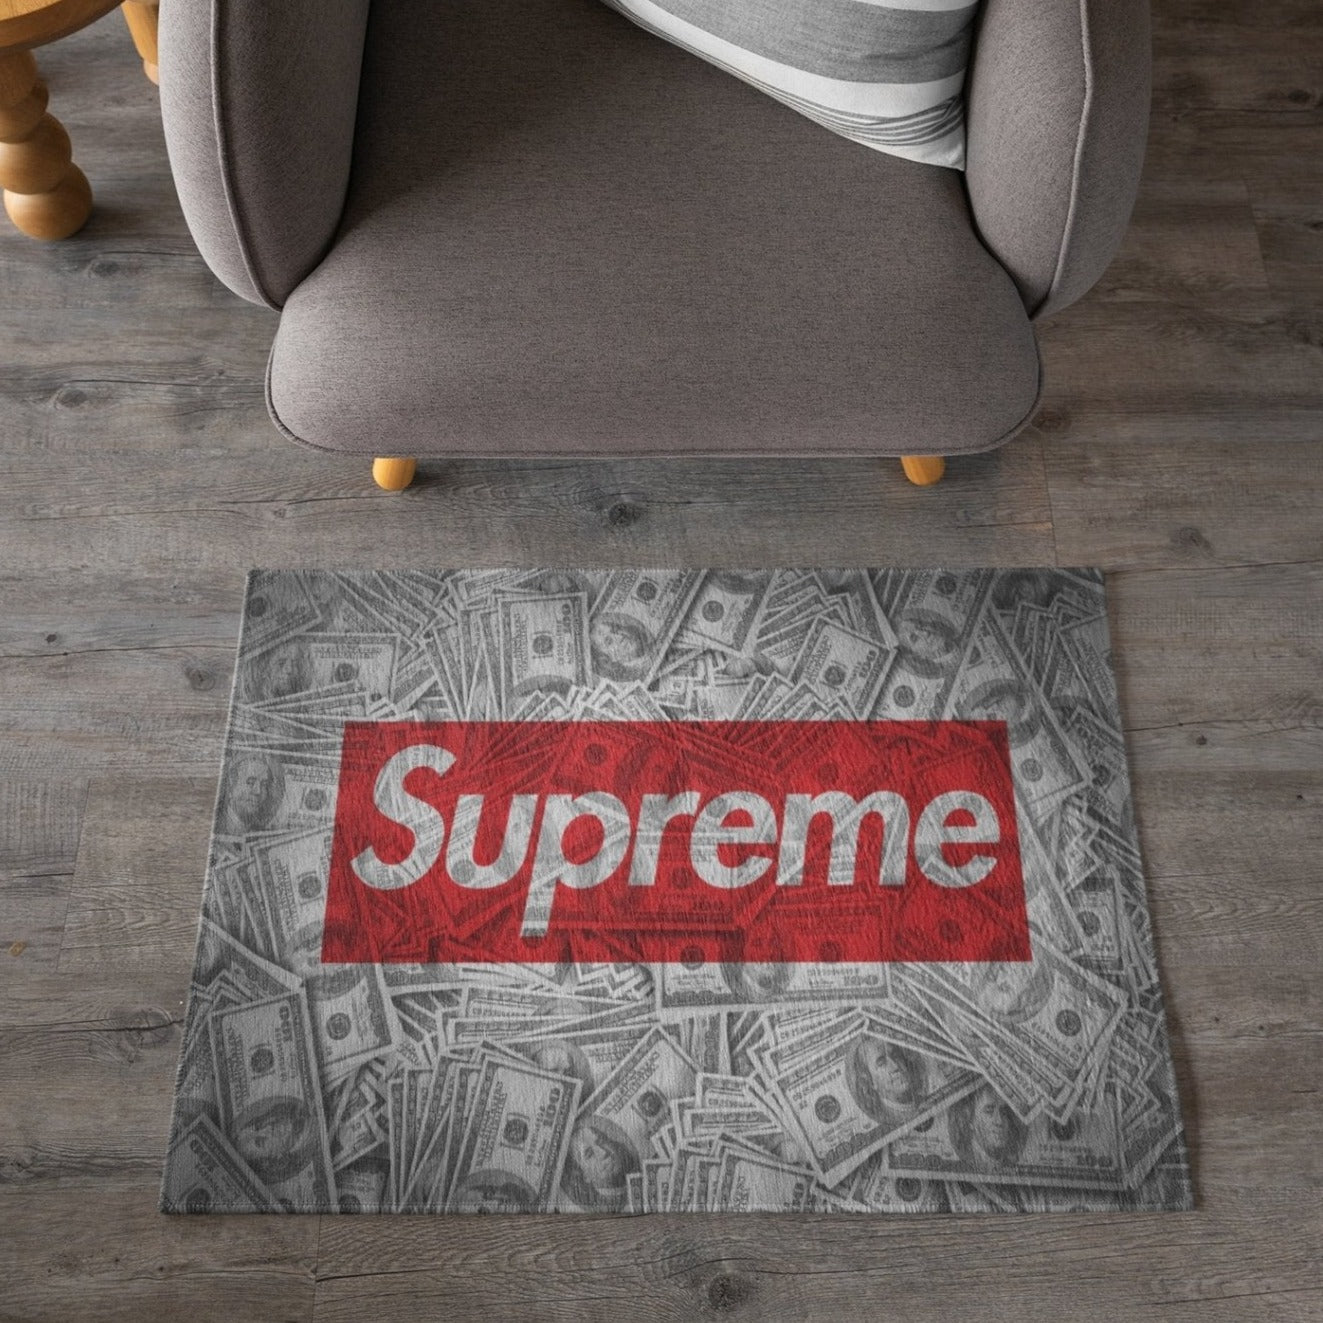 Supreme Area Rug Hypebeast Carpet Luxurious Fashion Brand Logo